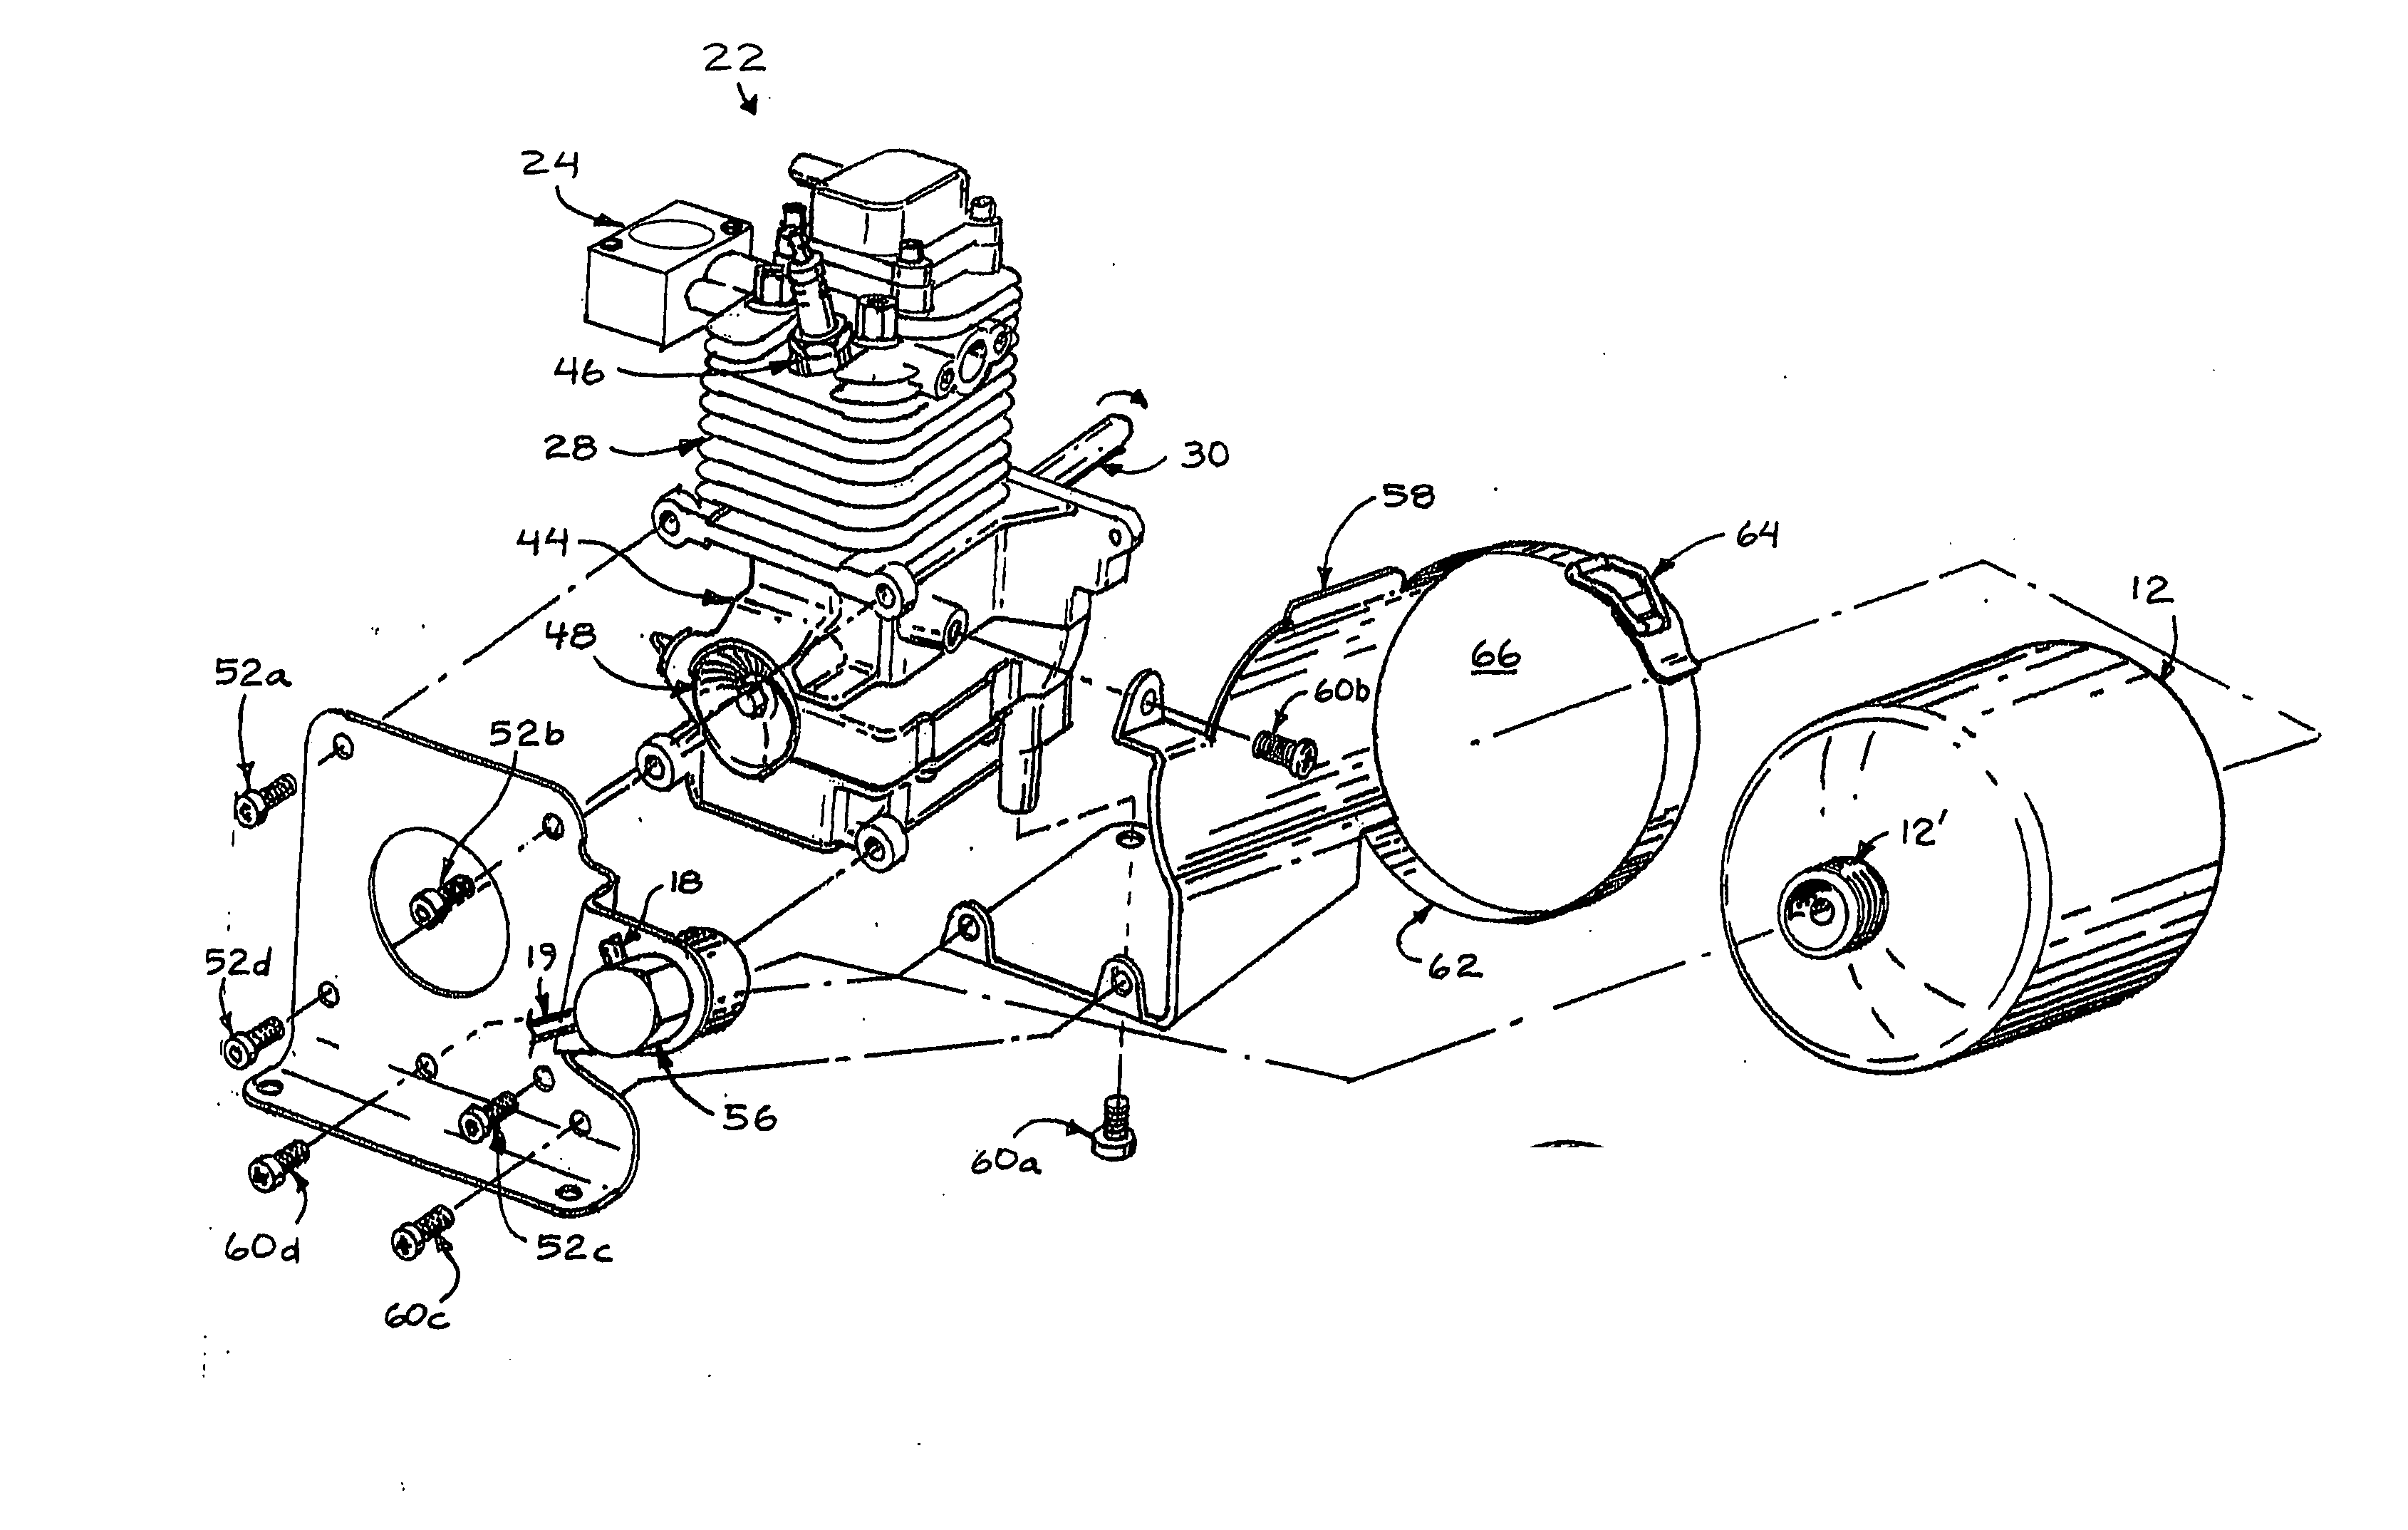 Portable gas powered internal combustion engine arrangement